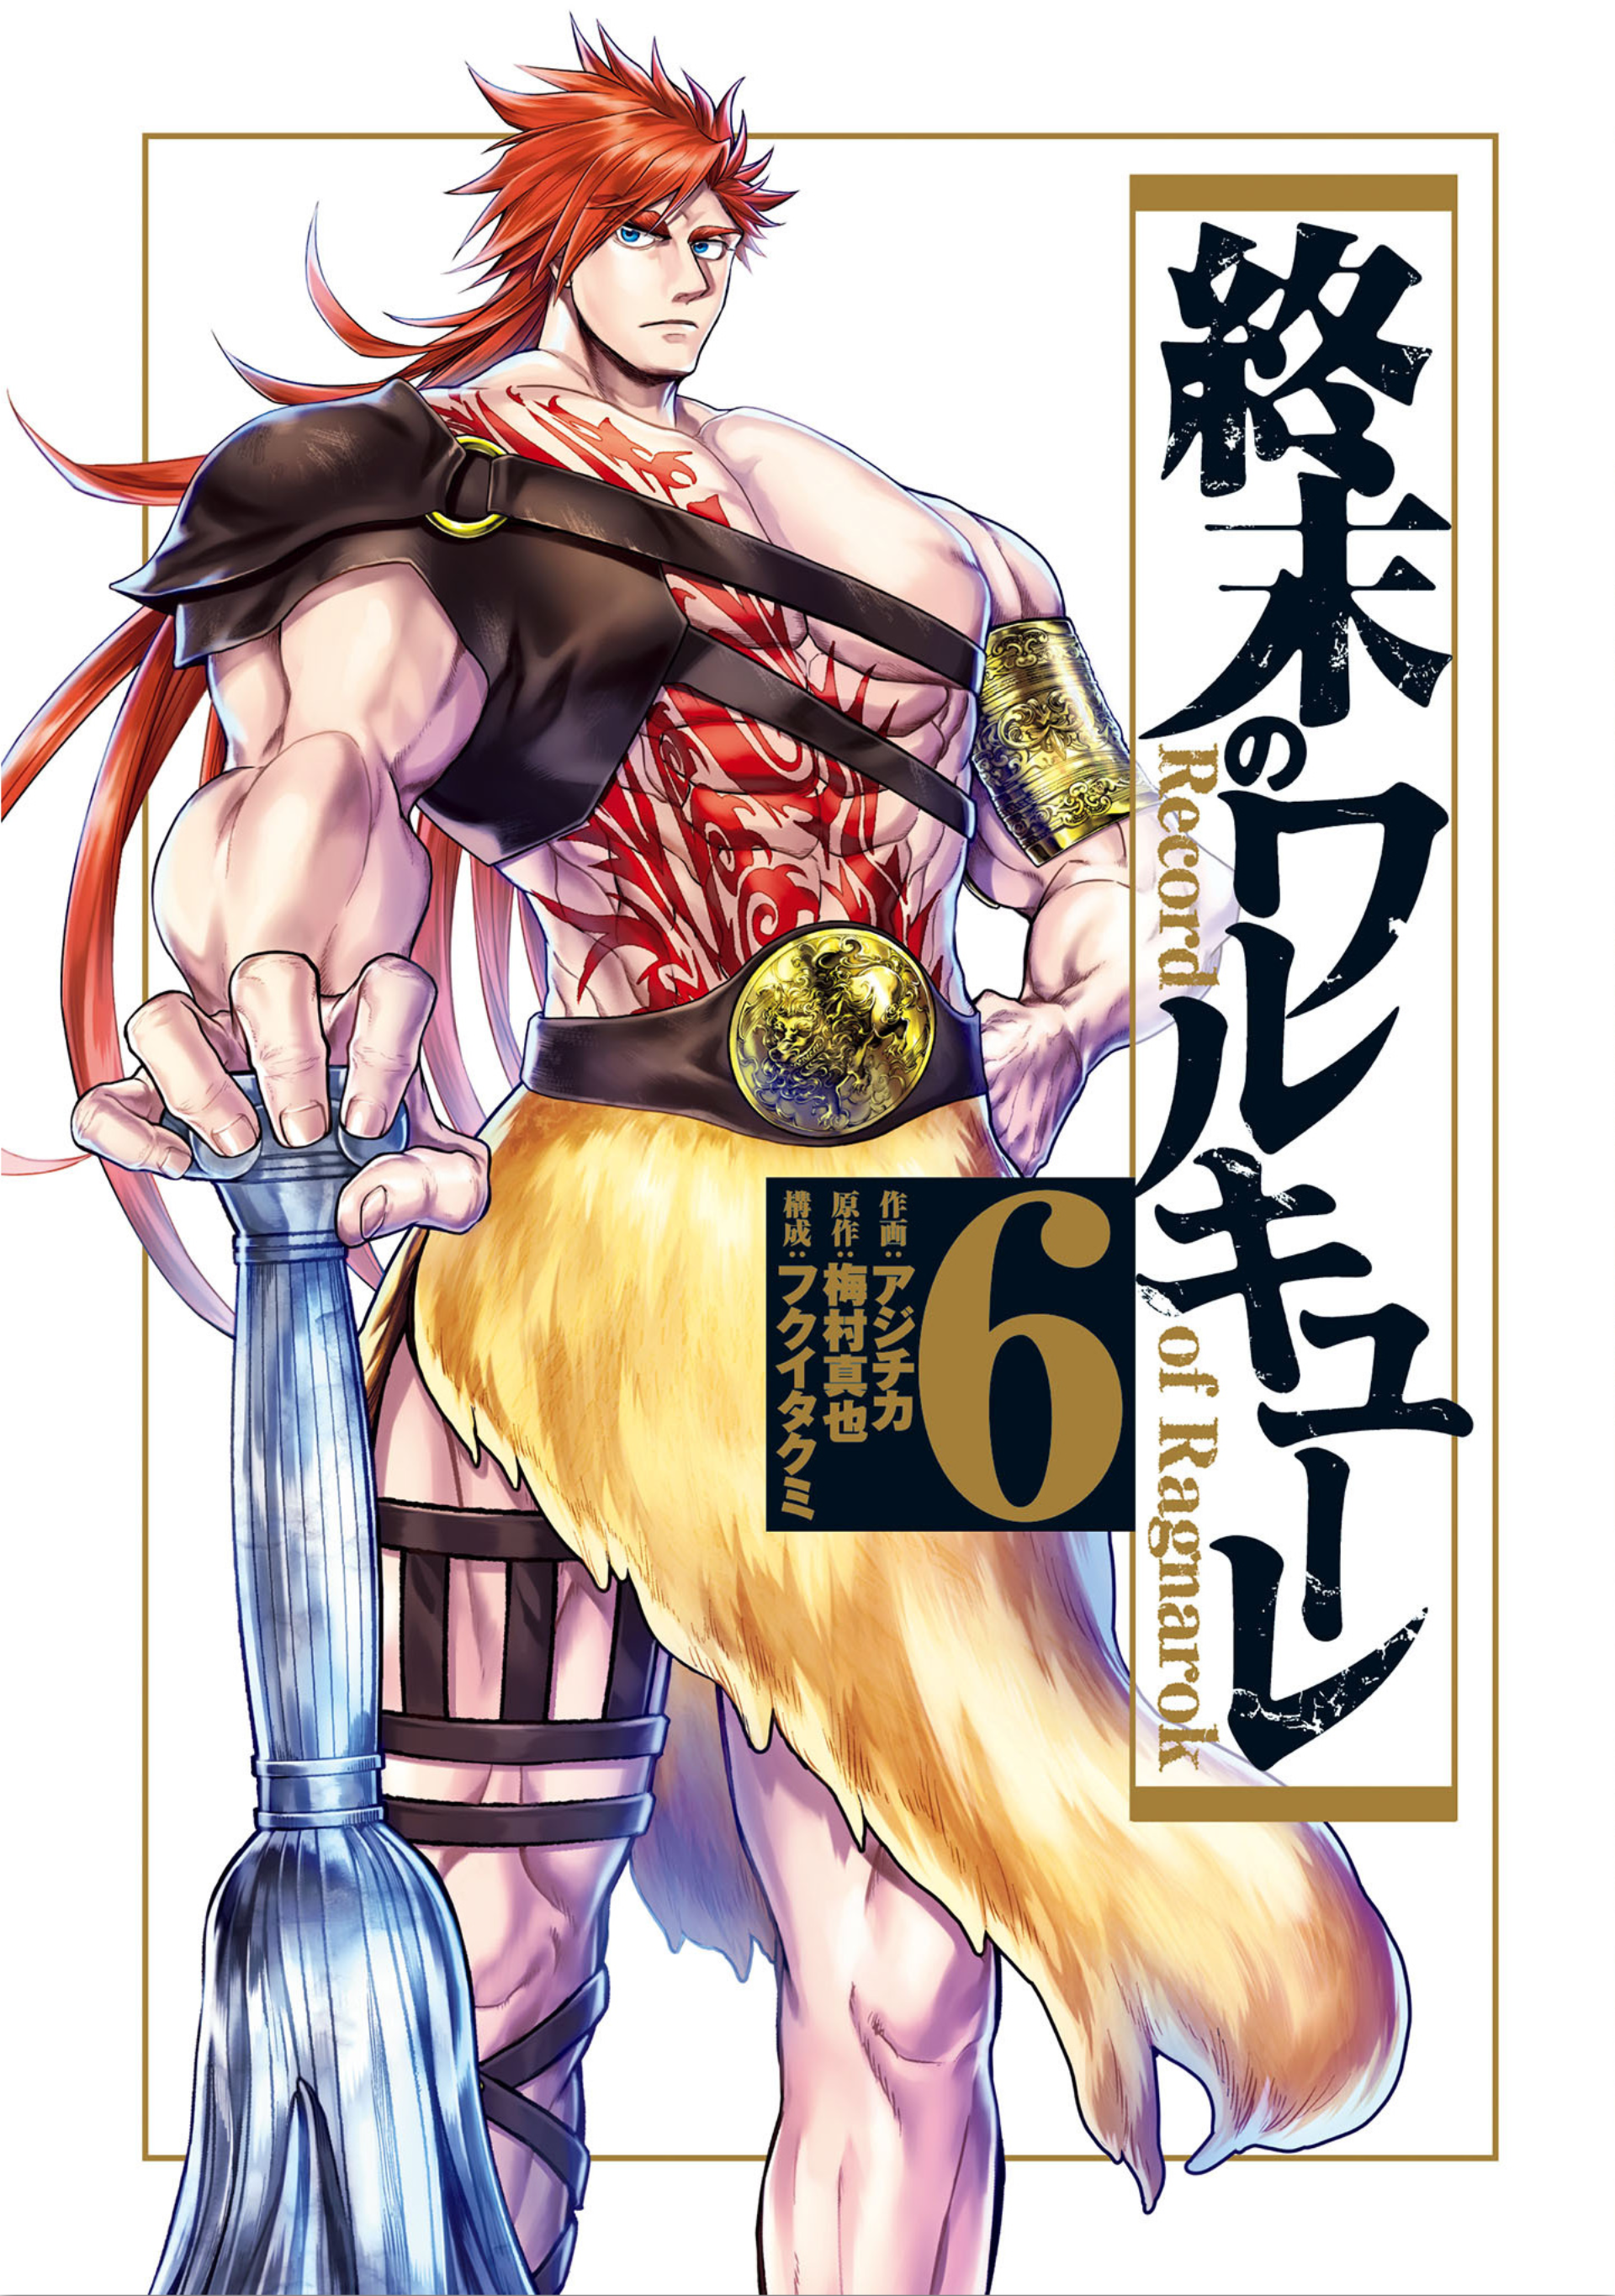 Read Shuumatsu no Valkyrie Manga Chapter 37 in English Free Online